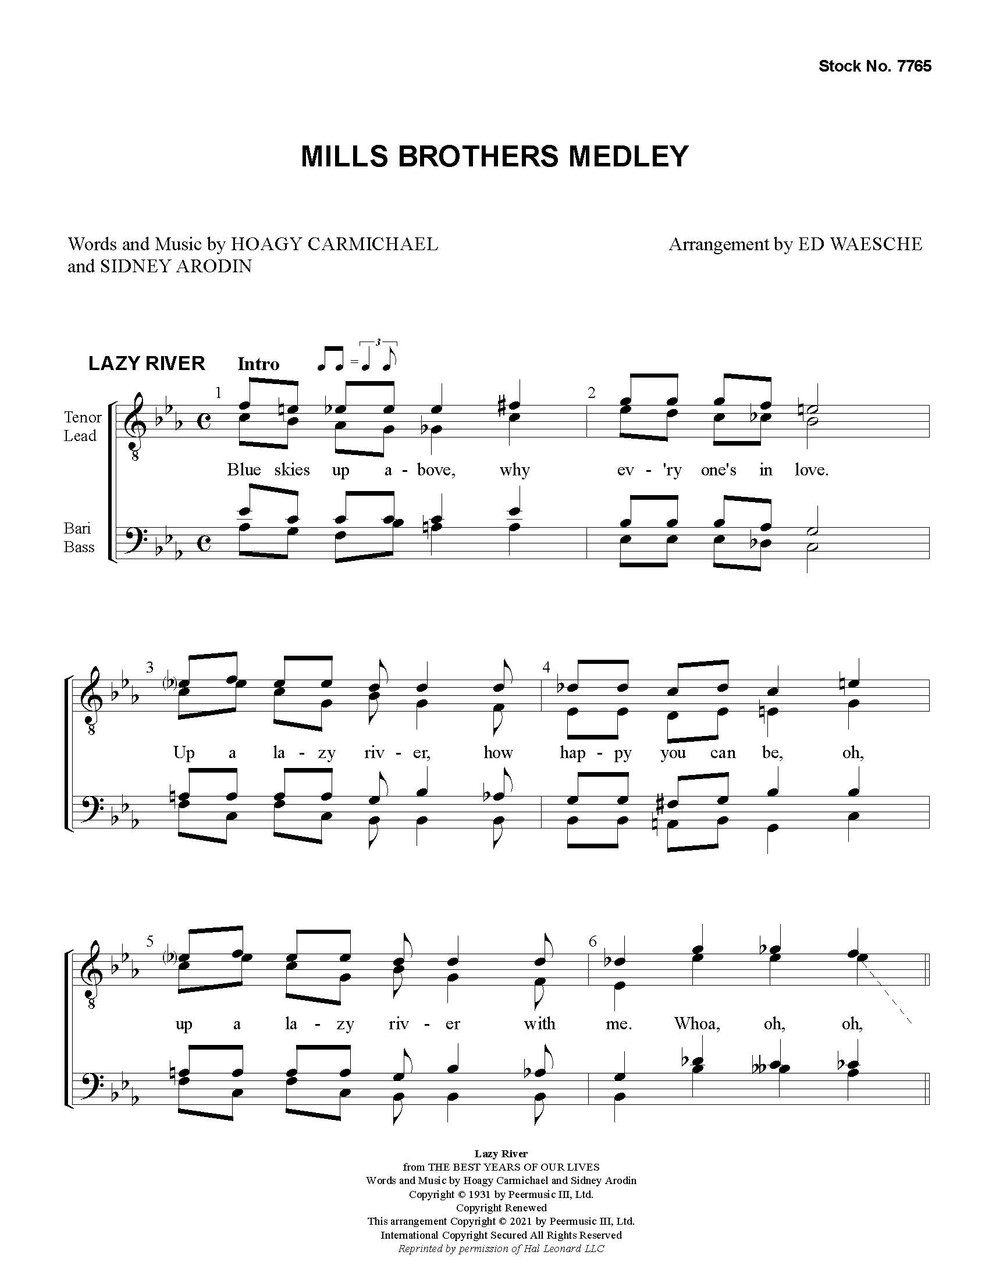 Mills Brothers Medley (TTBB) (arr. Waesche) - Download